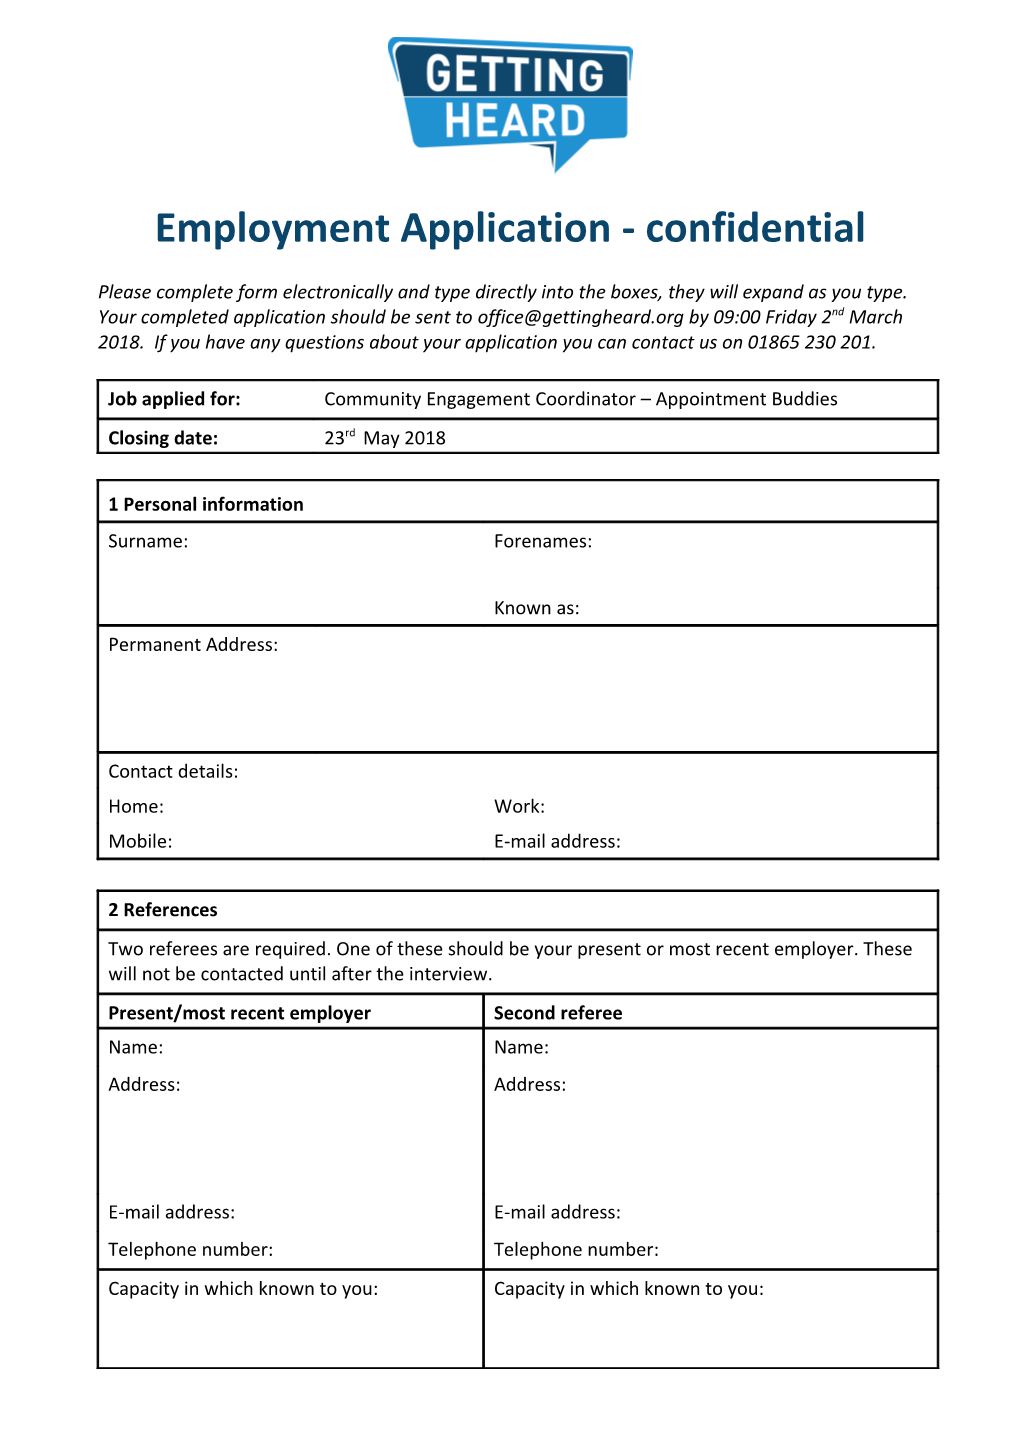 Employment Application - Confidential